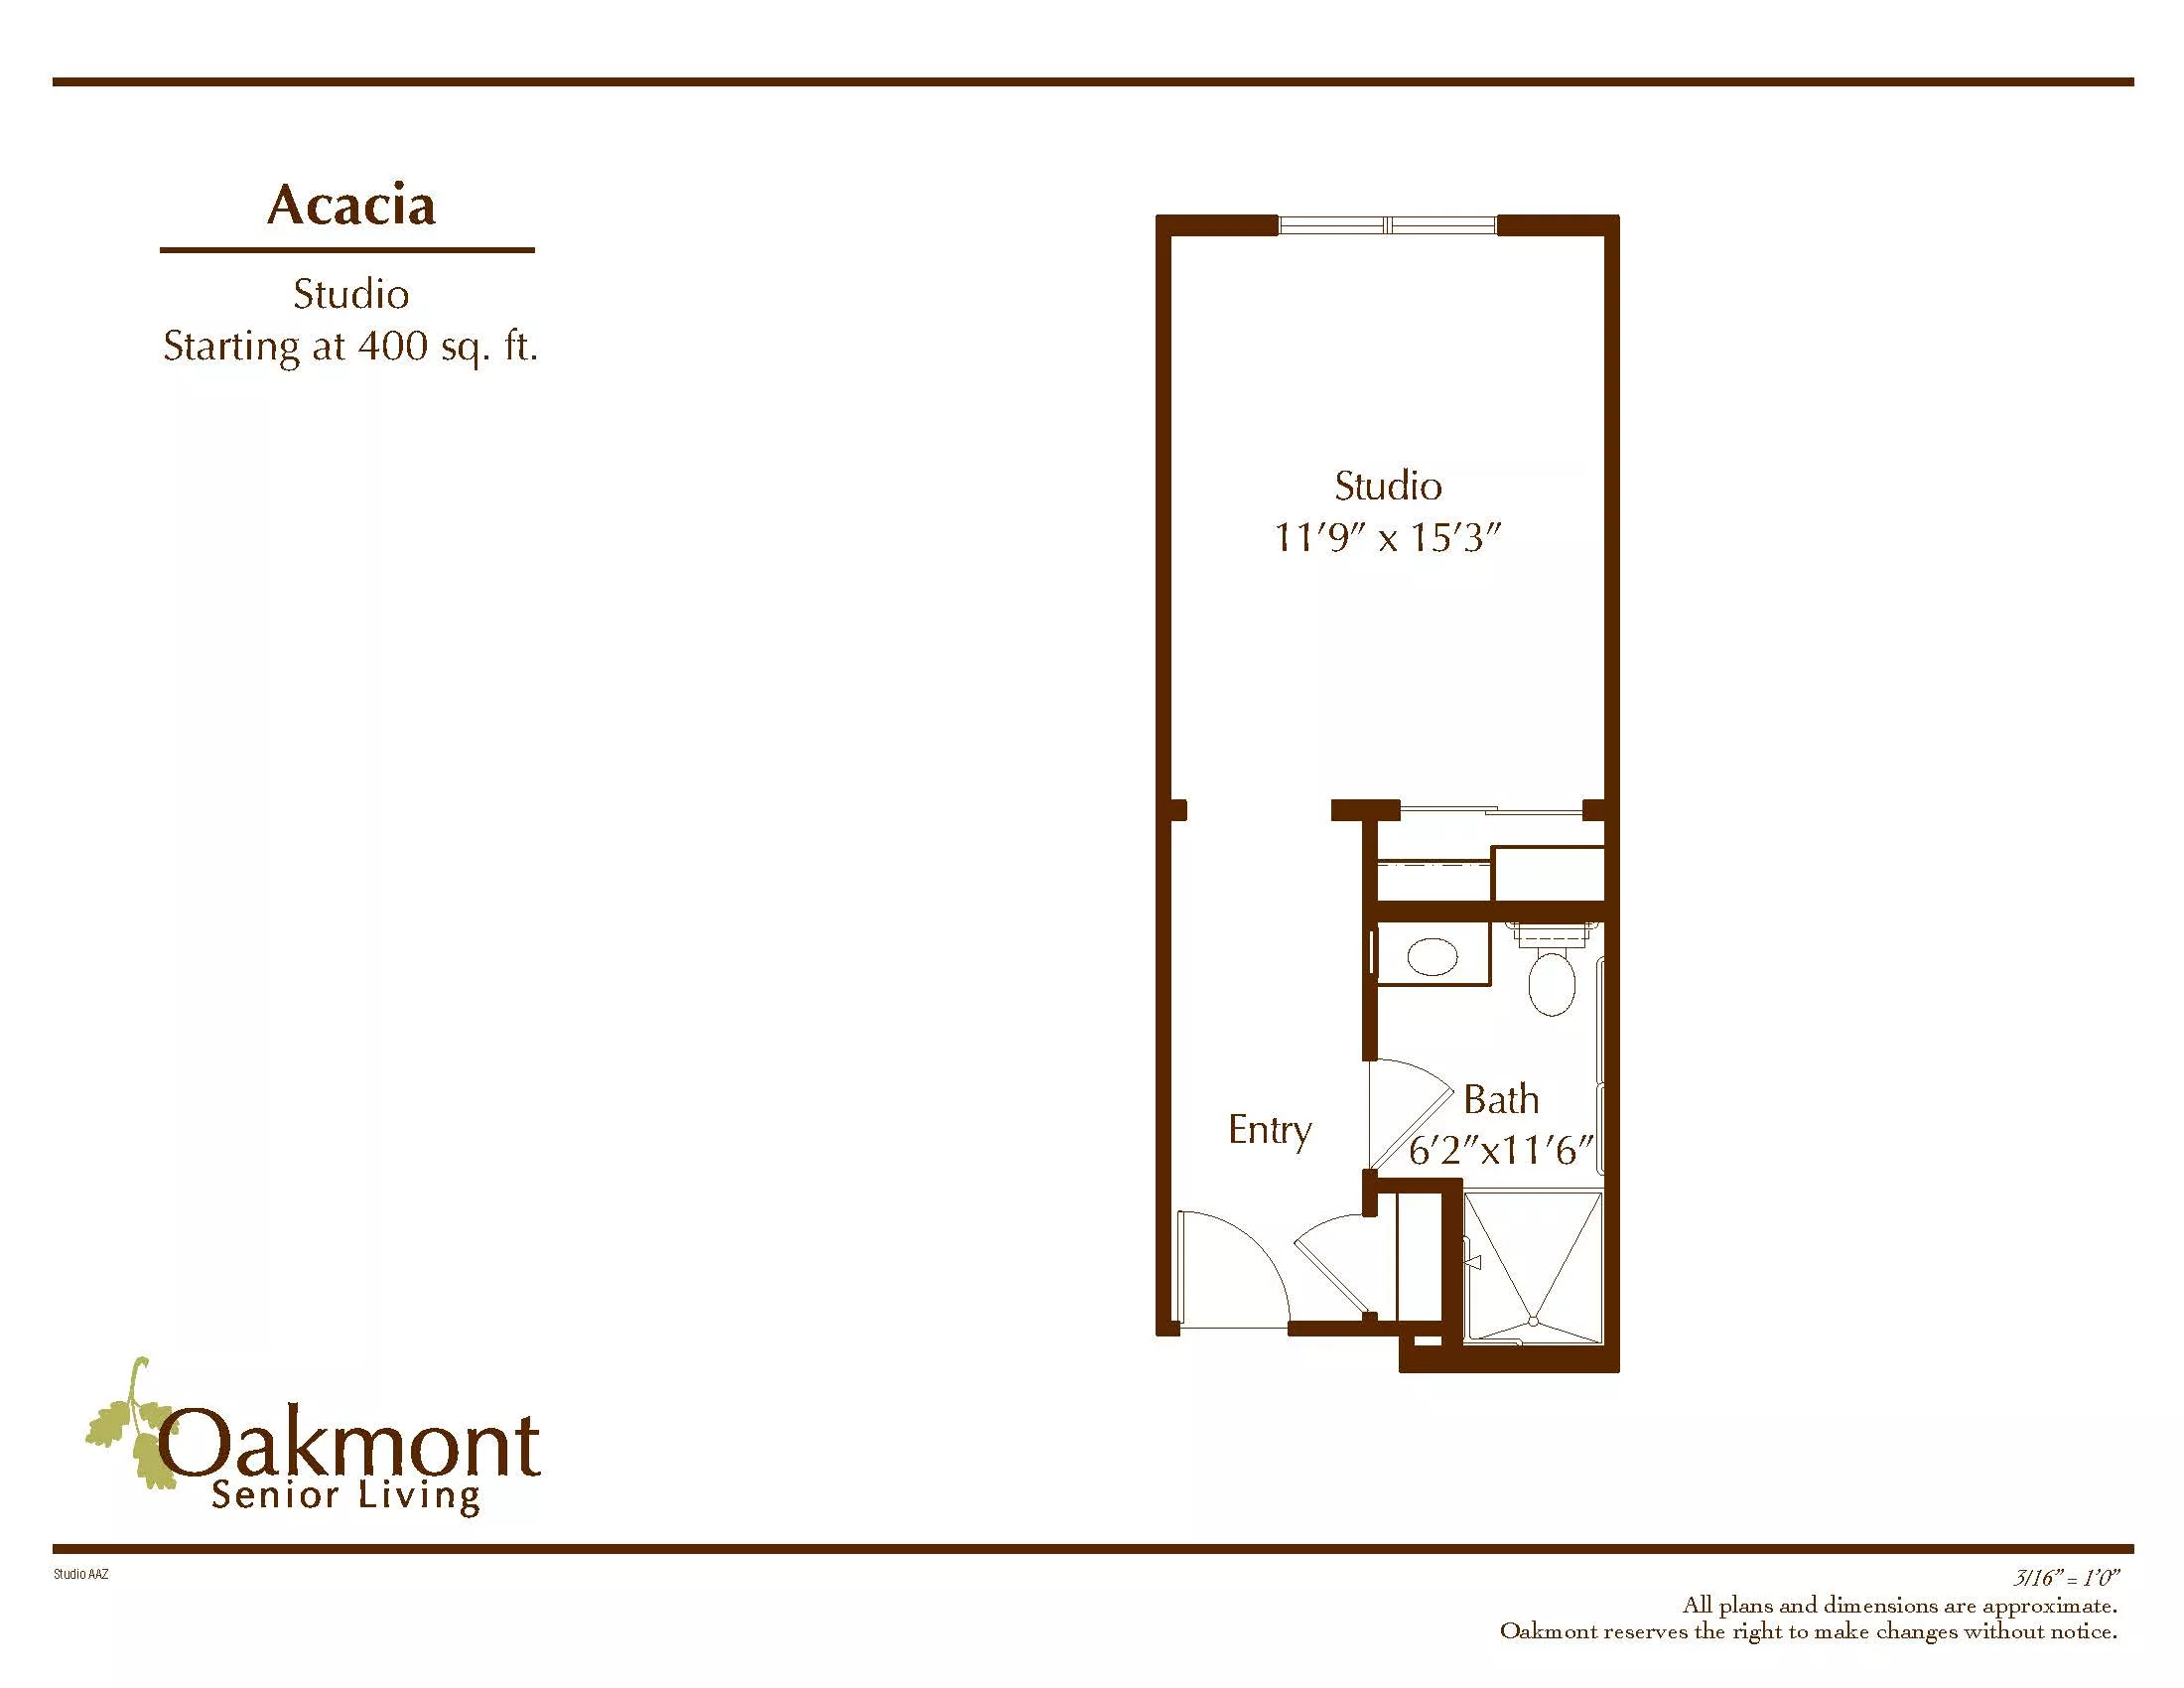 Acacia floor plan